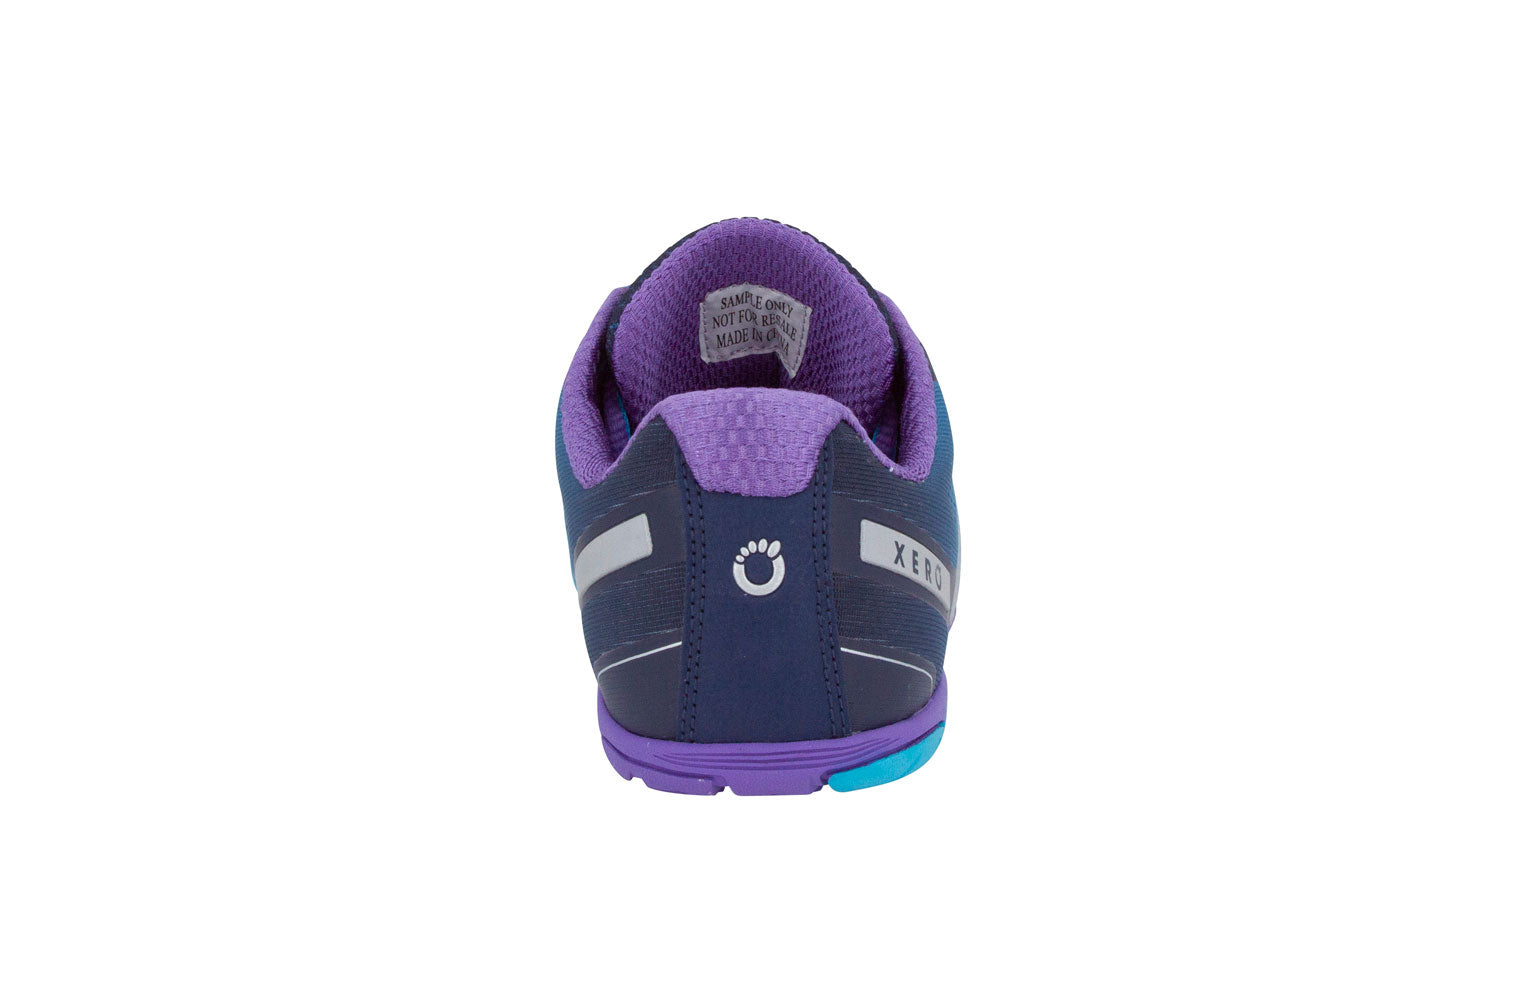 Xero Shoes HFS Womens barfods træningssko/løbesko til kvinder i farven atoll blue, bagfra